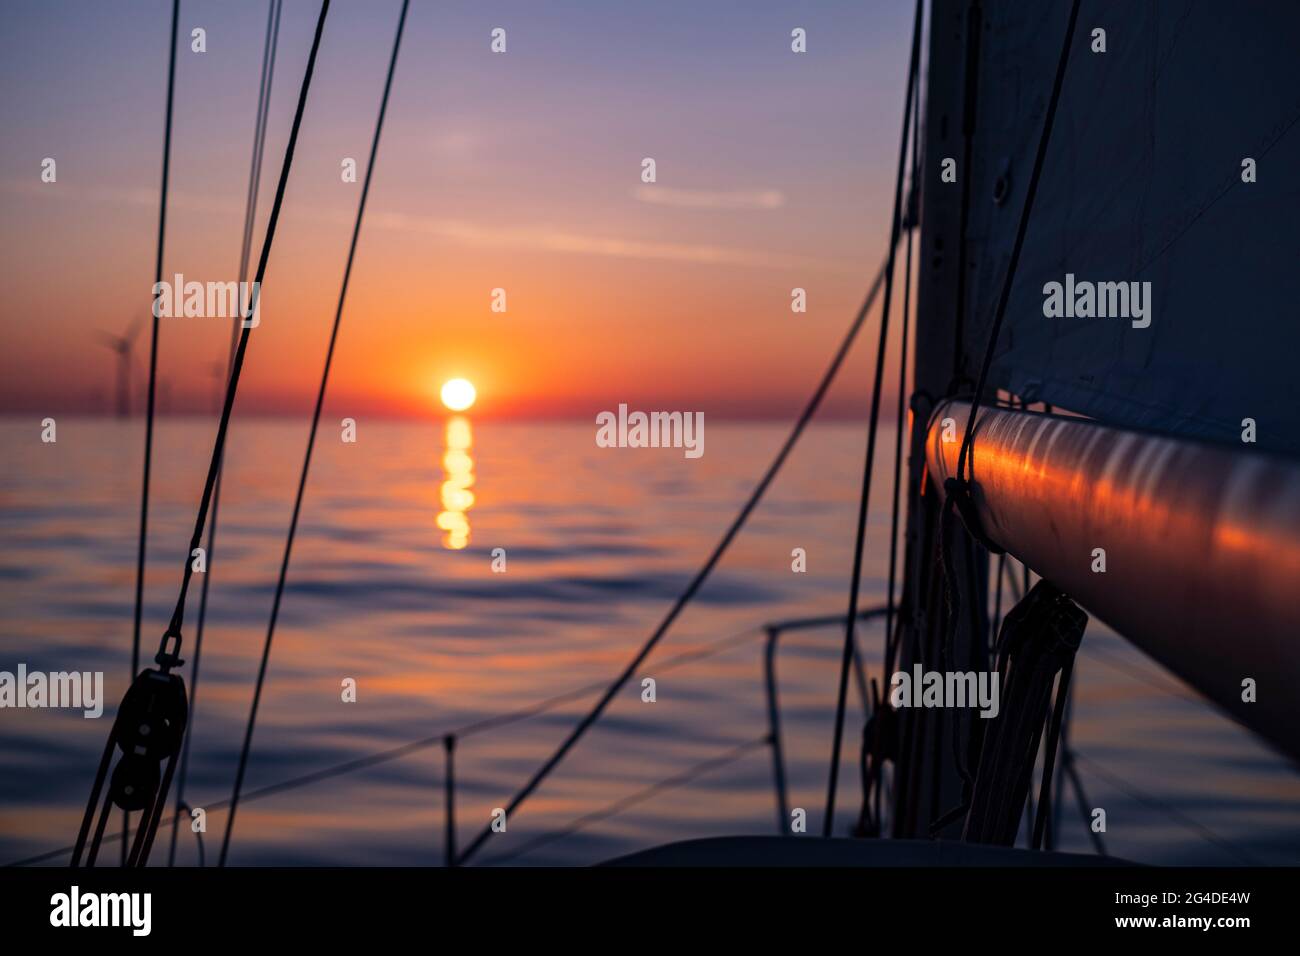 Sailing the north sea Stock Photo